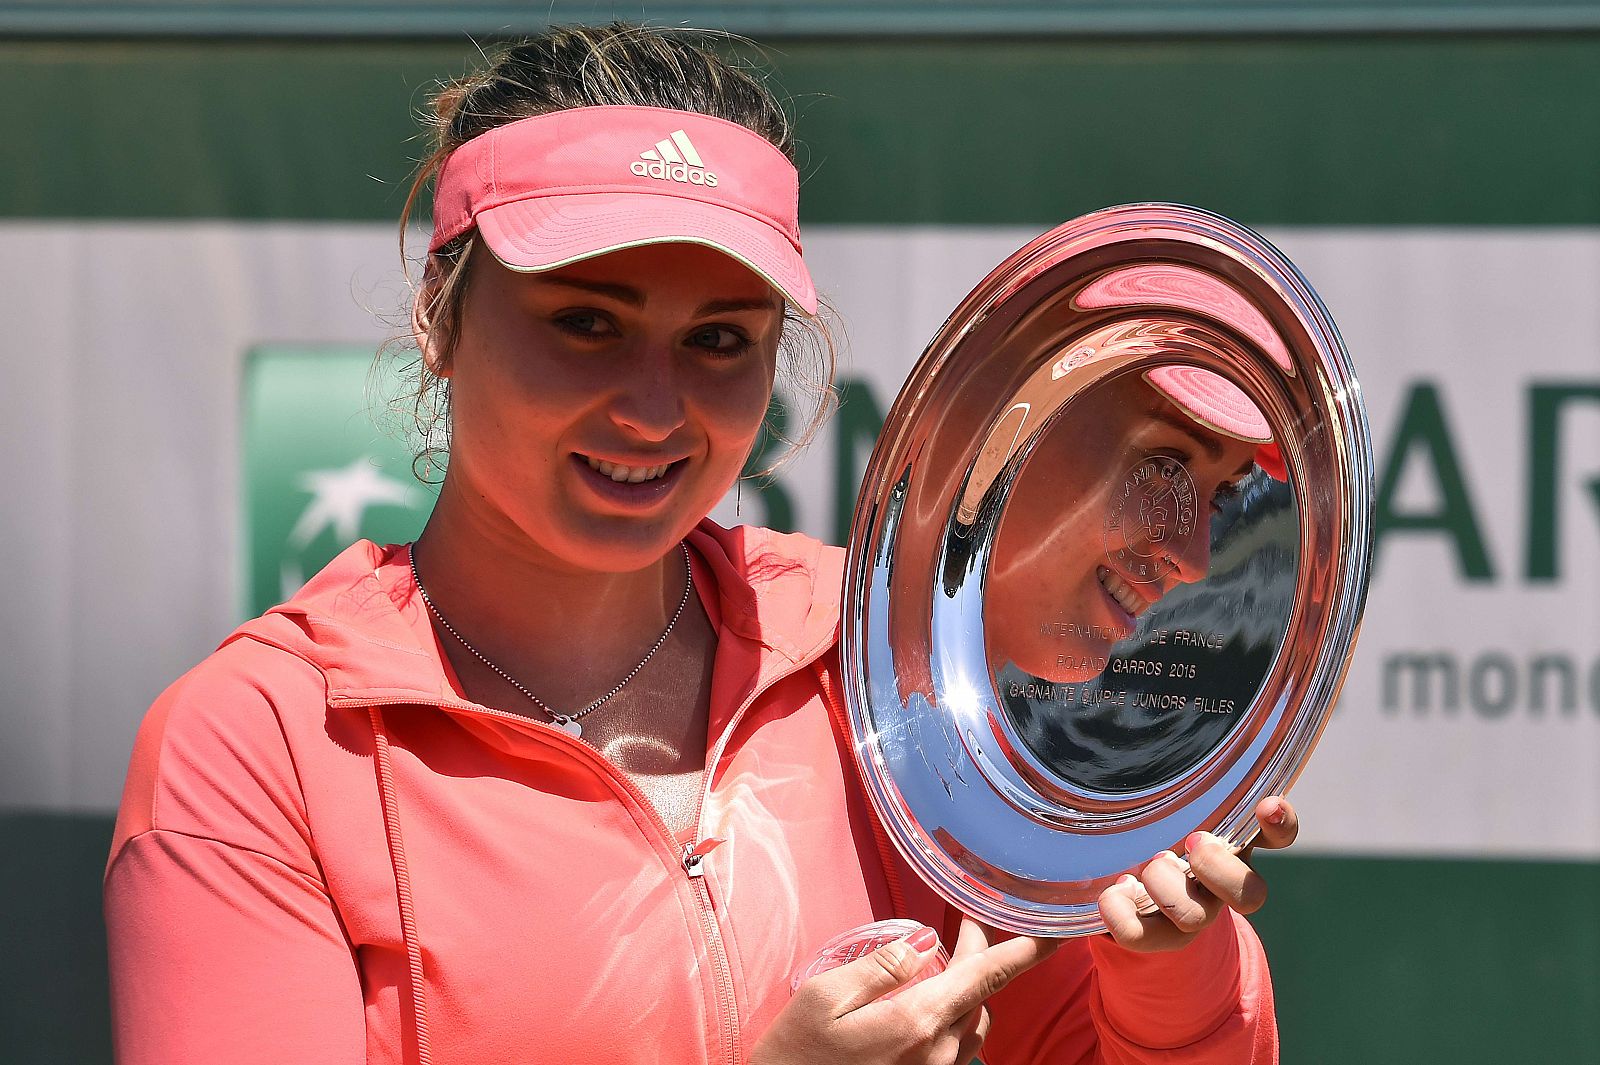 La tenista española Paula Badosa Gibert celebra su triunfo den el Roland Garros Júnior 2015.